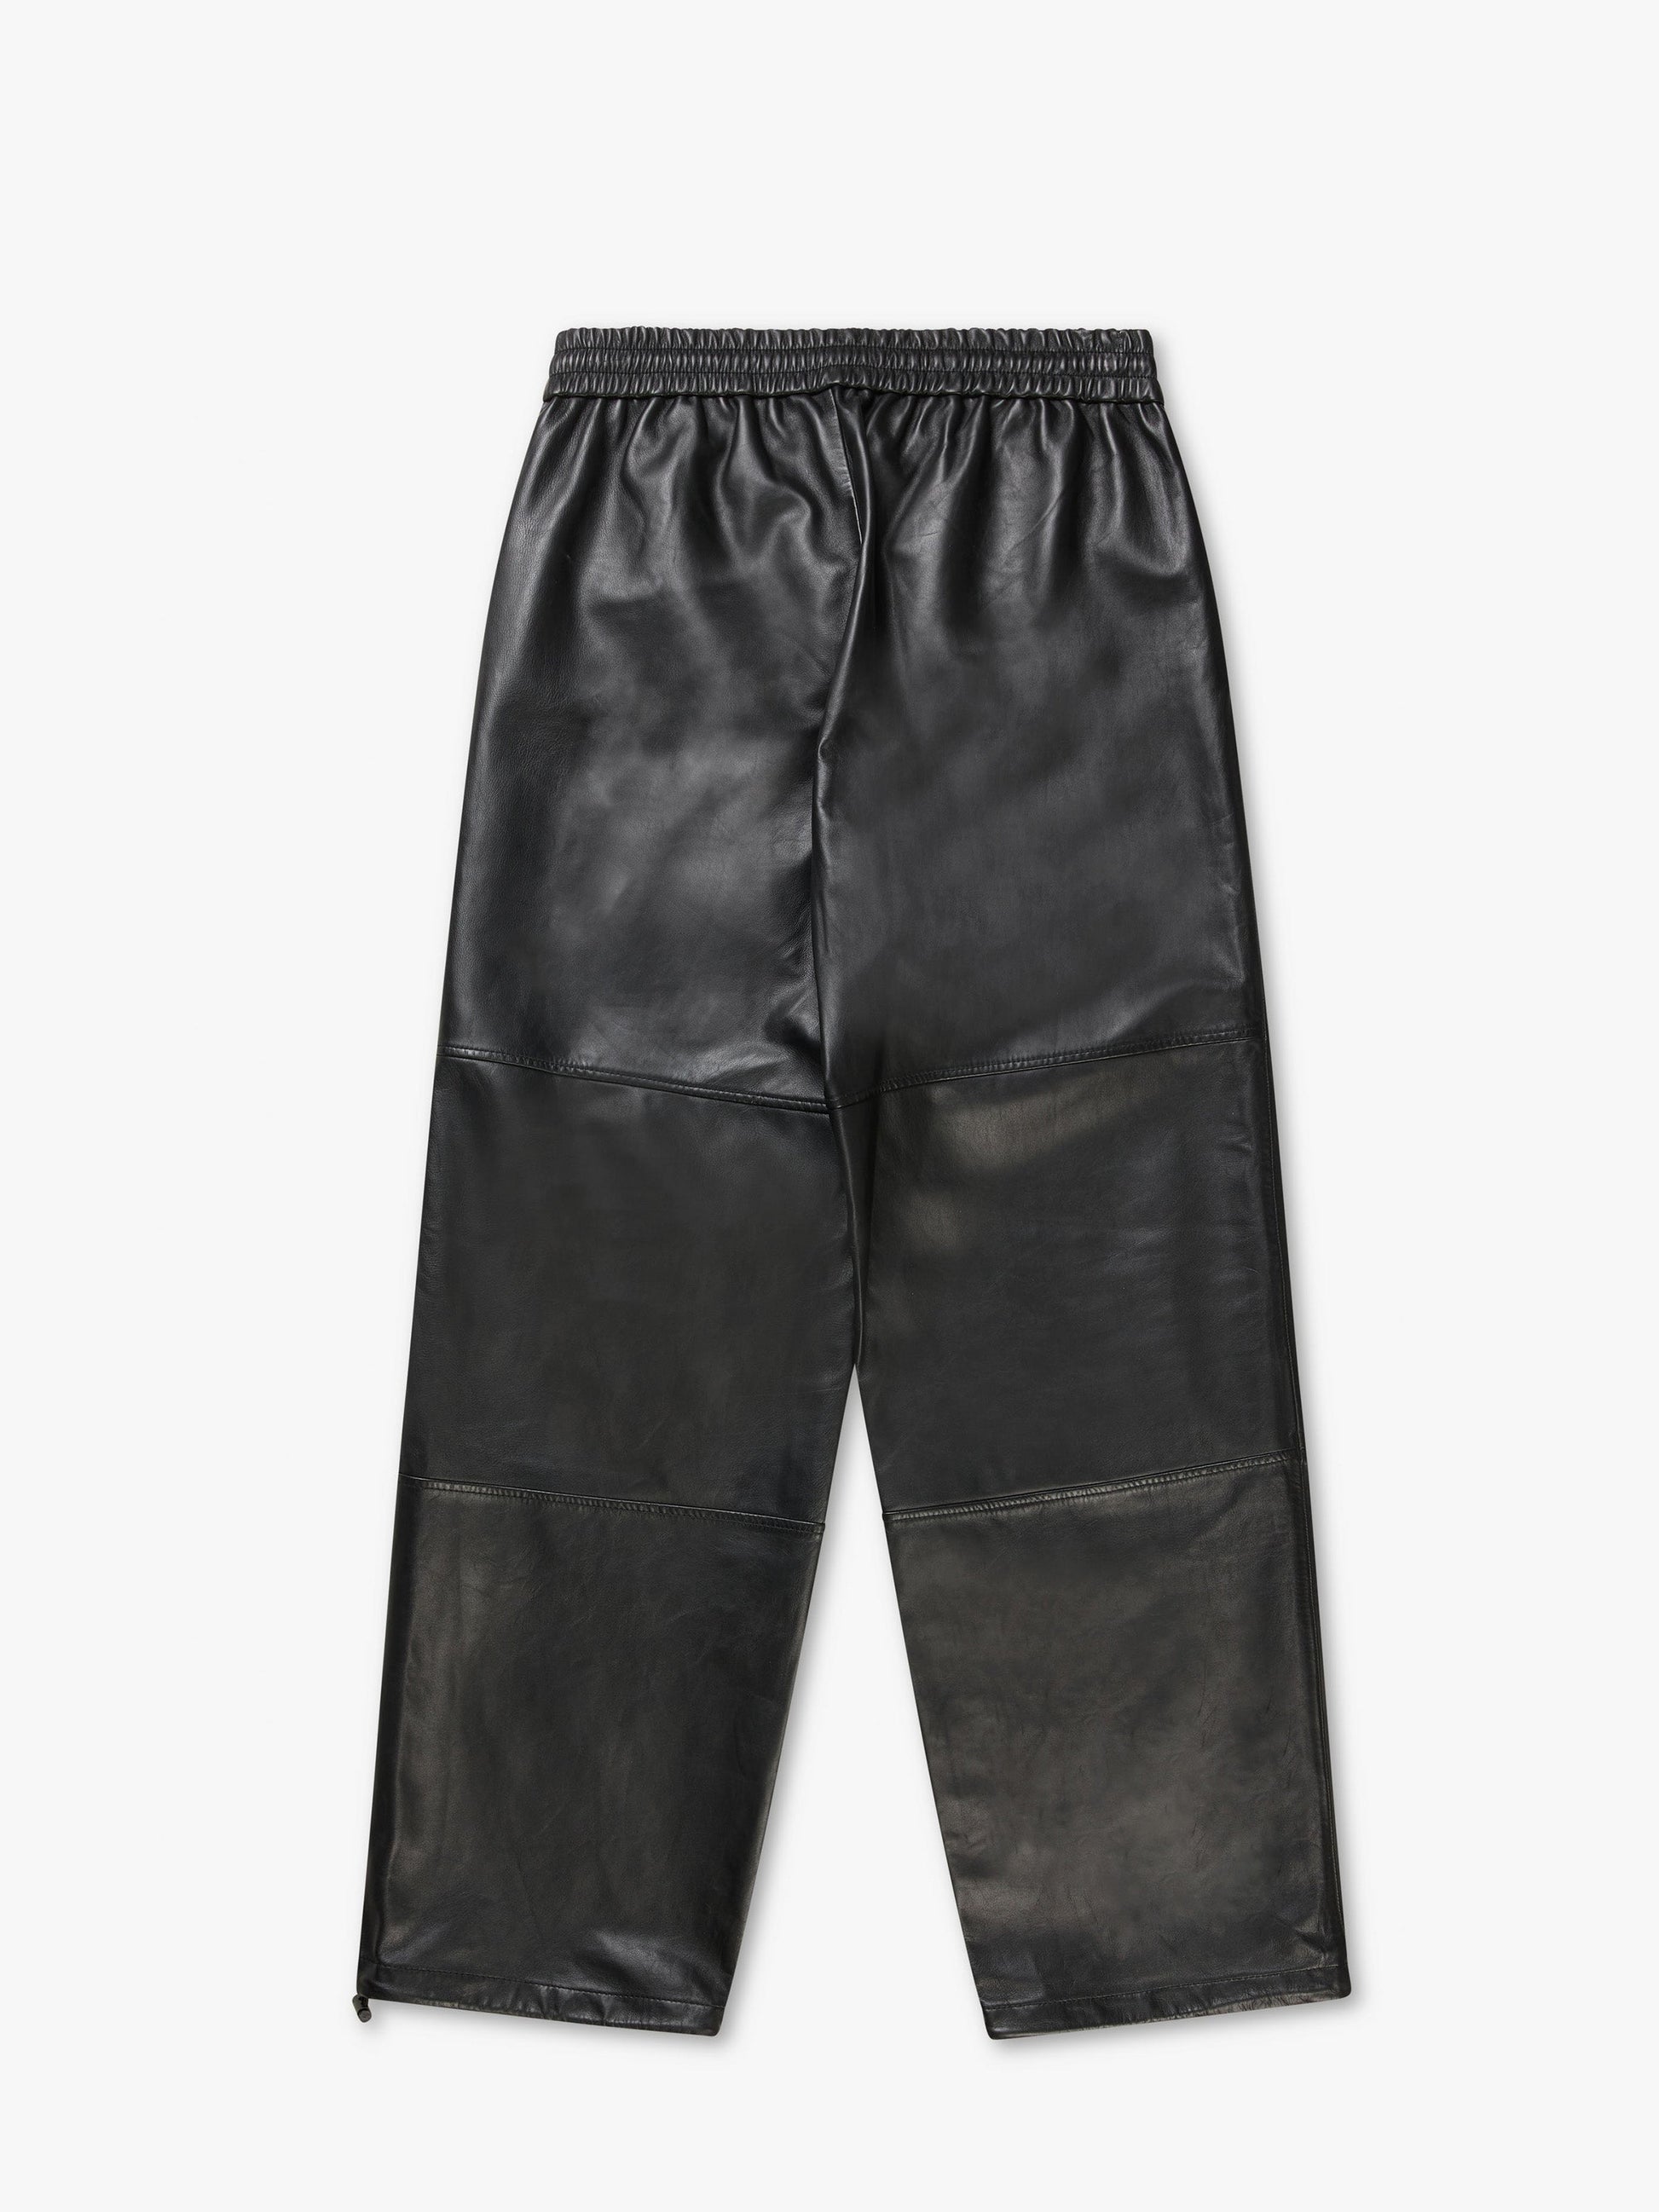 7 DAYS Leather Track Pants Pants 001 Black